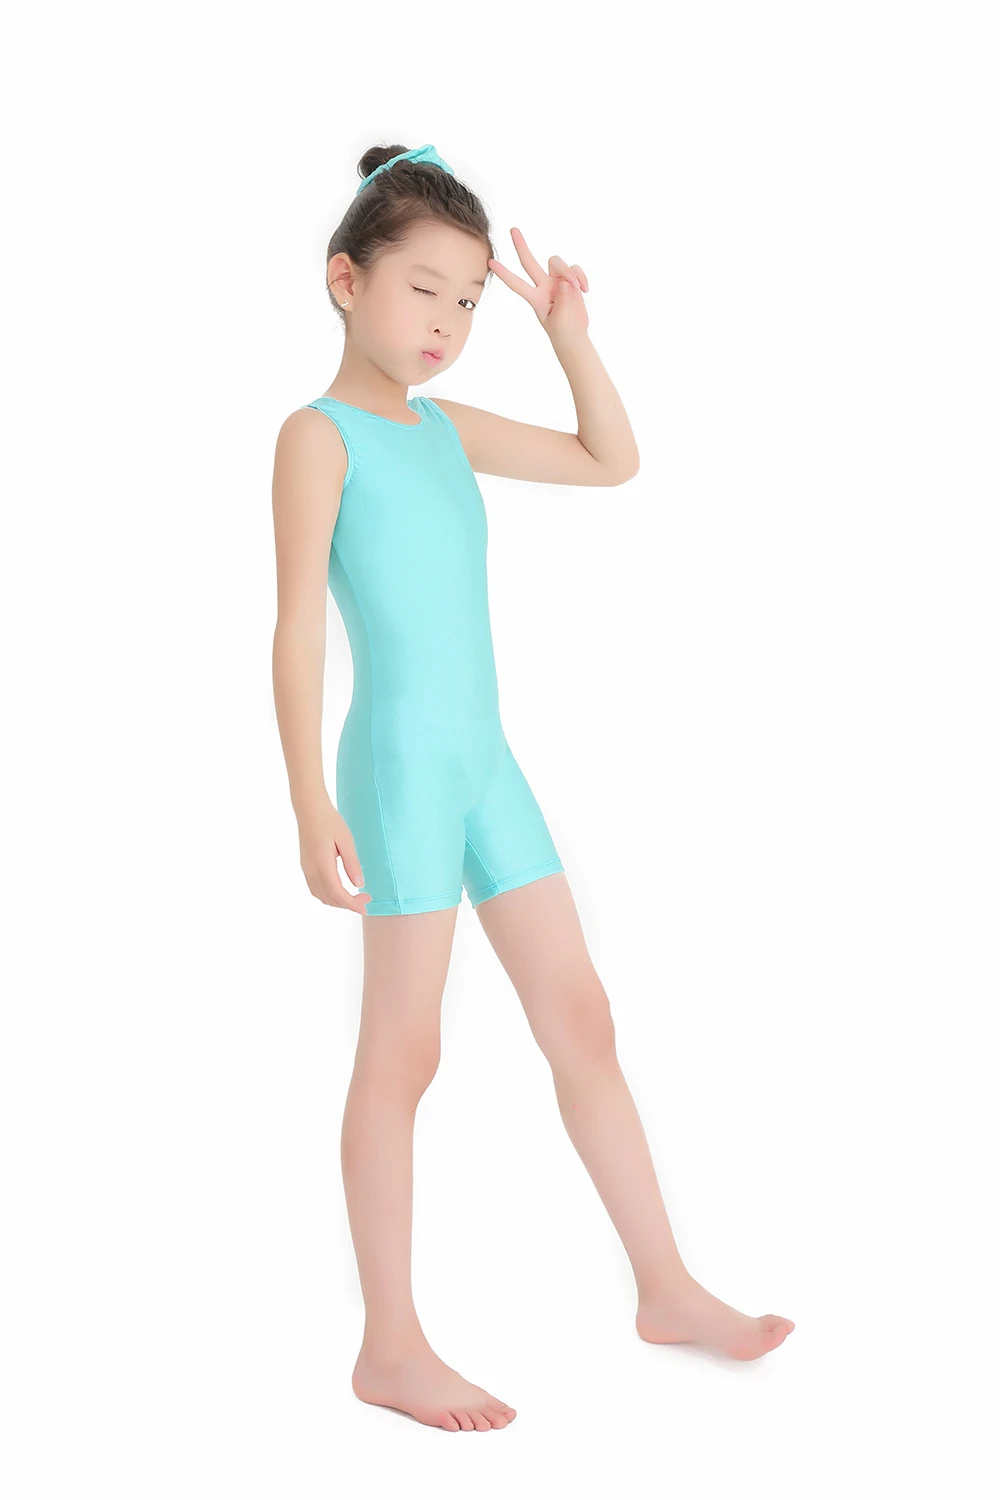 Speerise Unitard Kids Short Tank Biketard Dance Costumes for Girls Gymnastics 